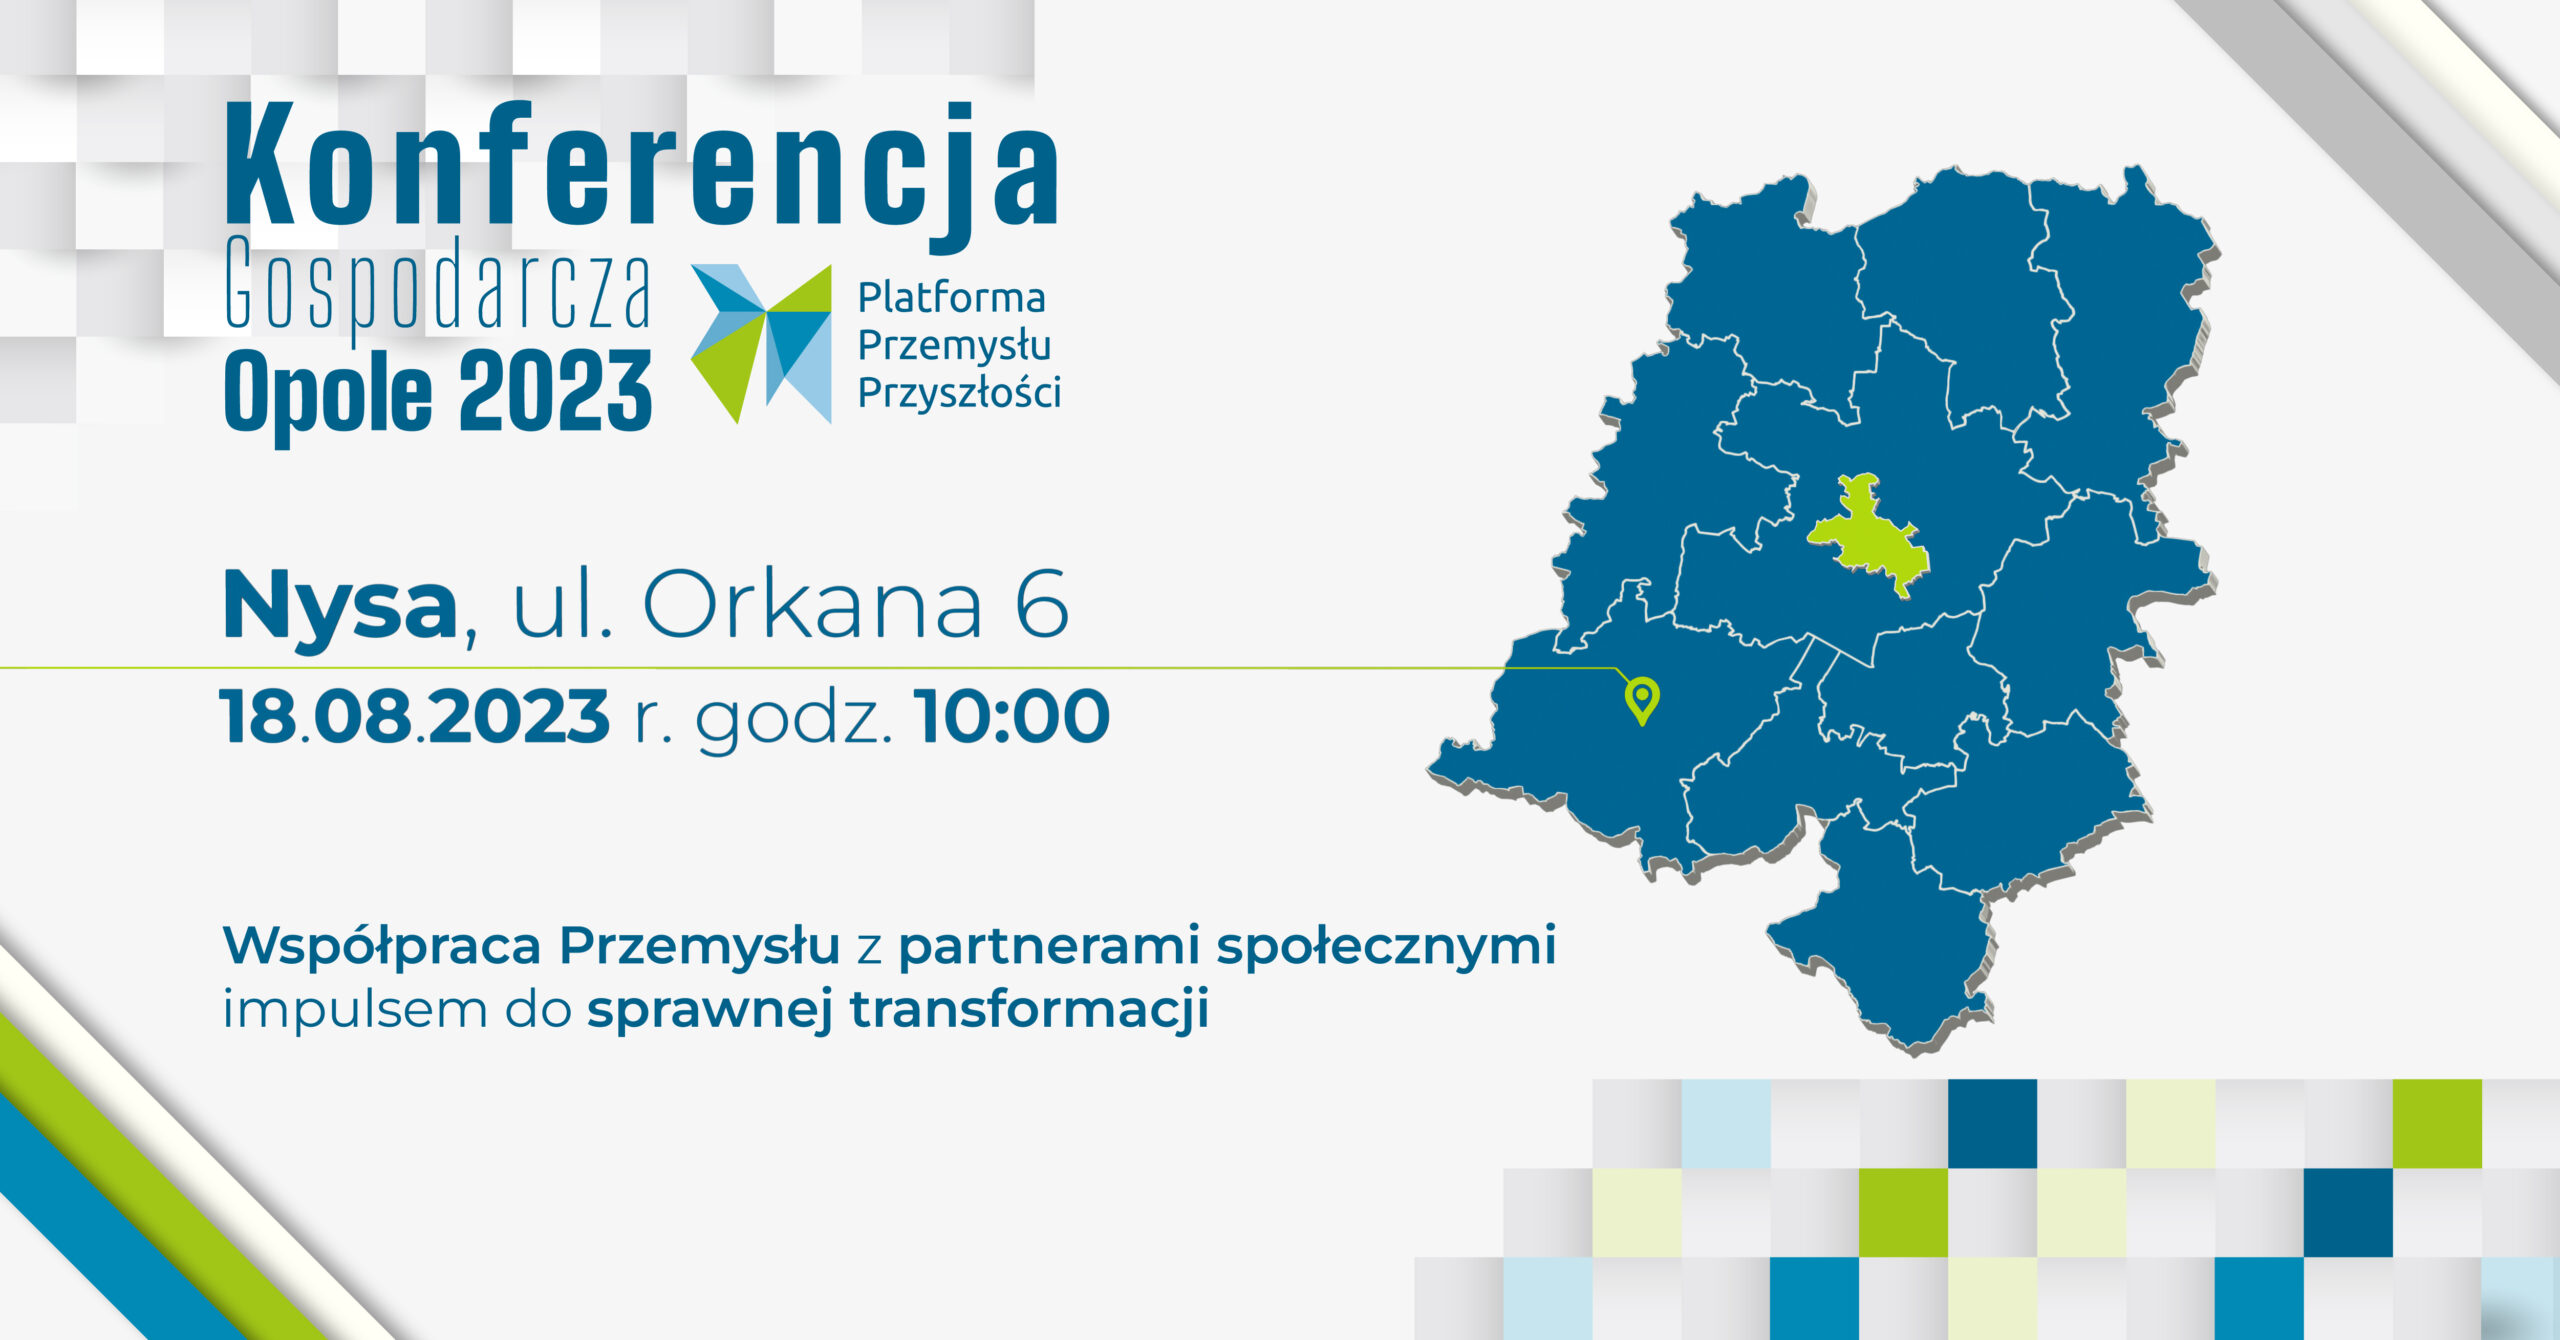 Konferencja Gospodarcza Opole 2023